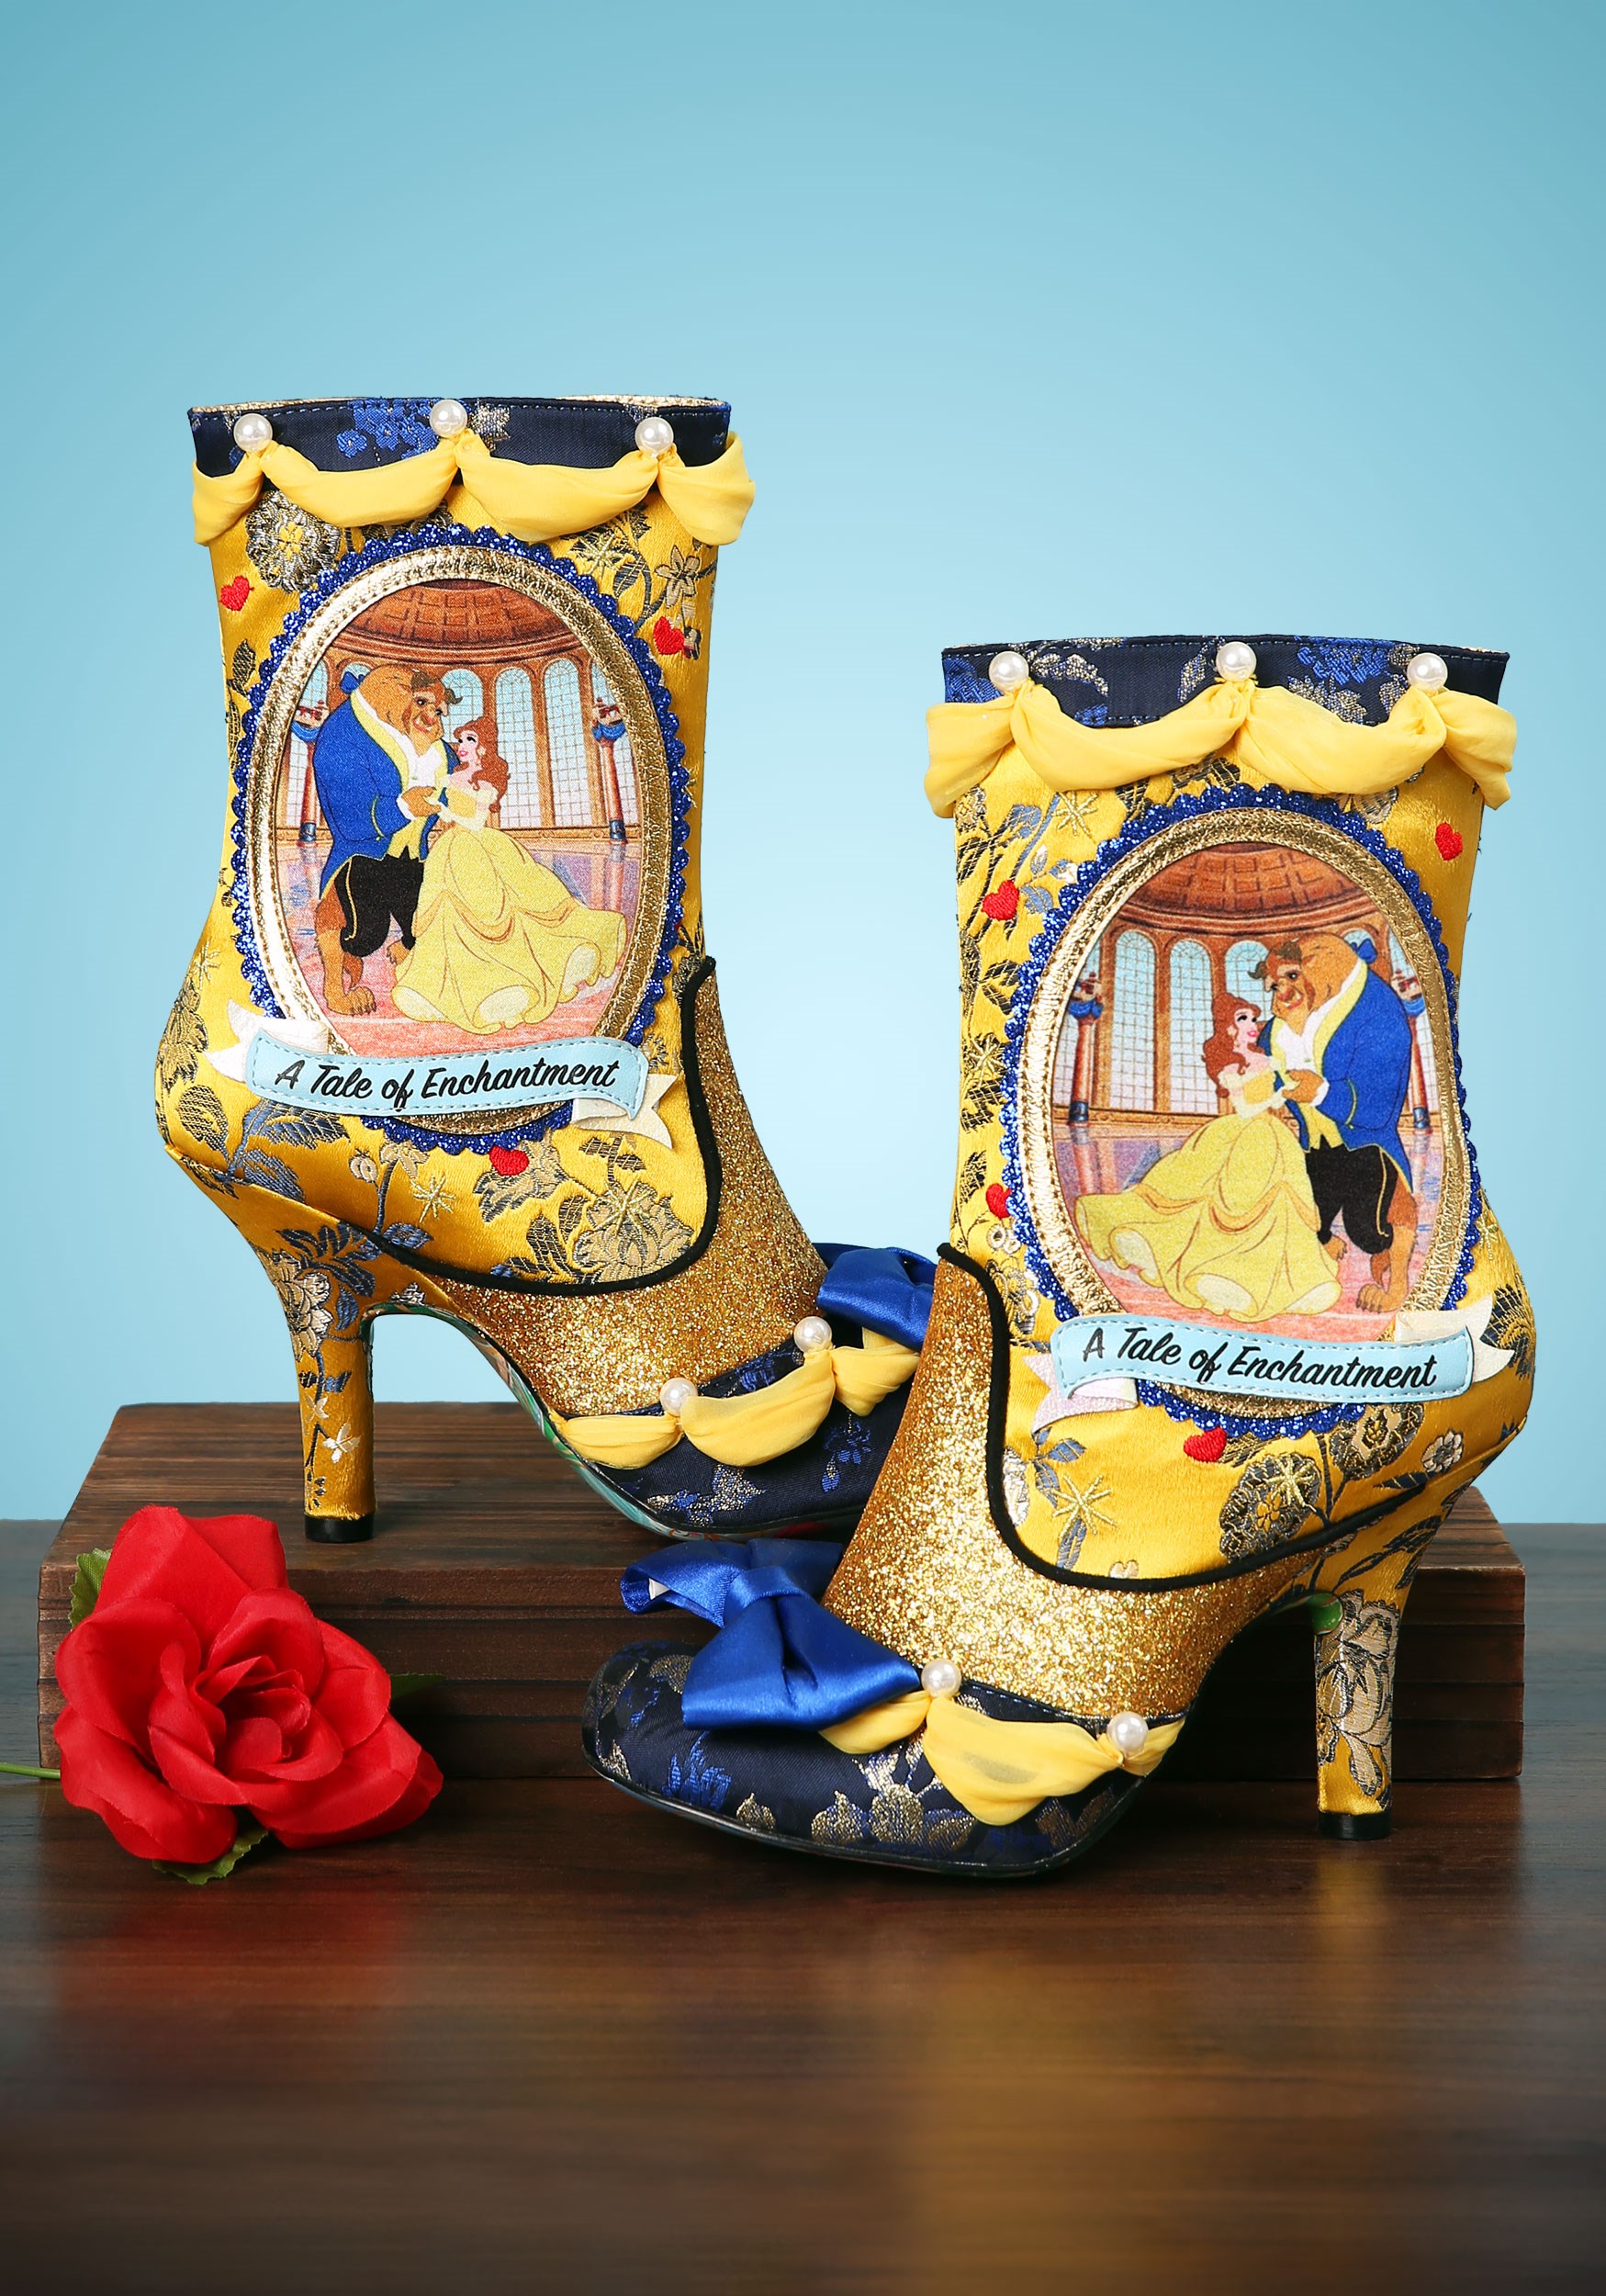 disney themed heels